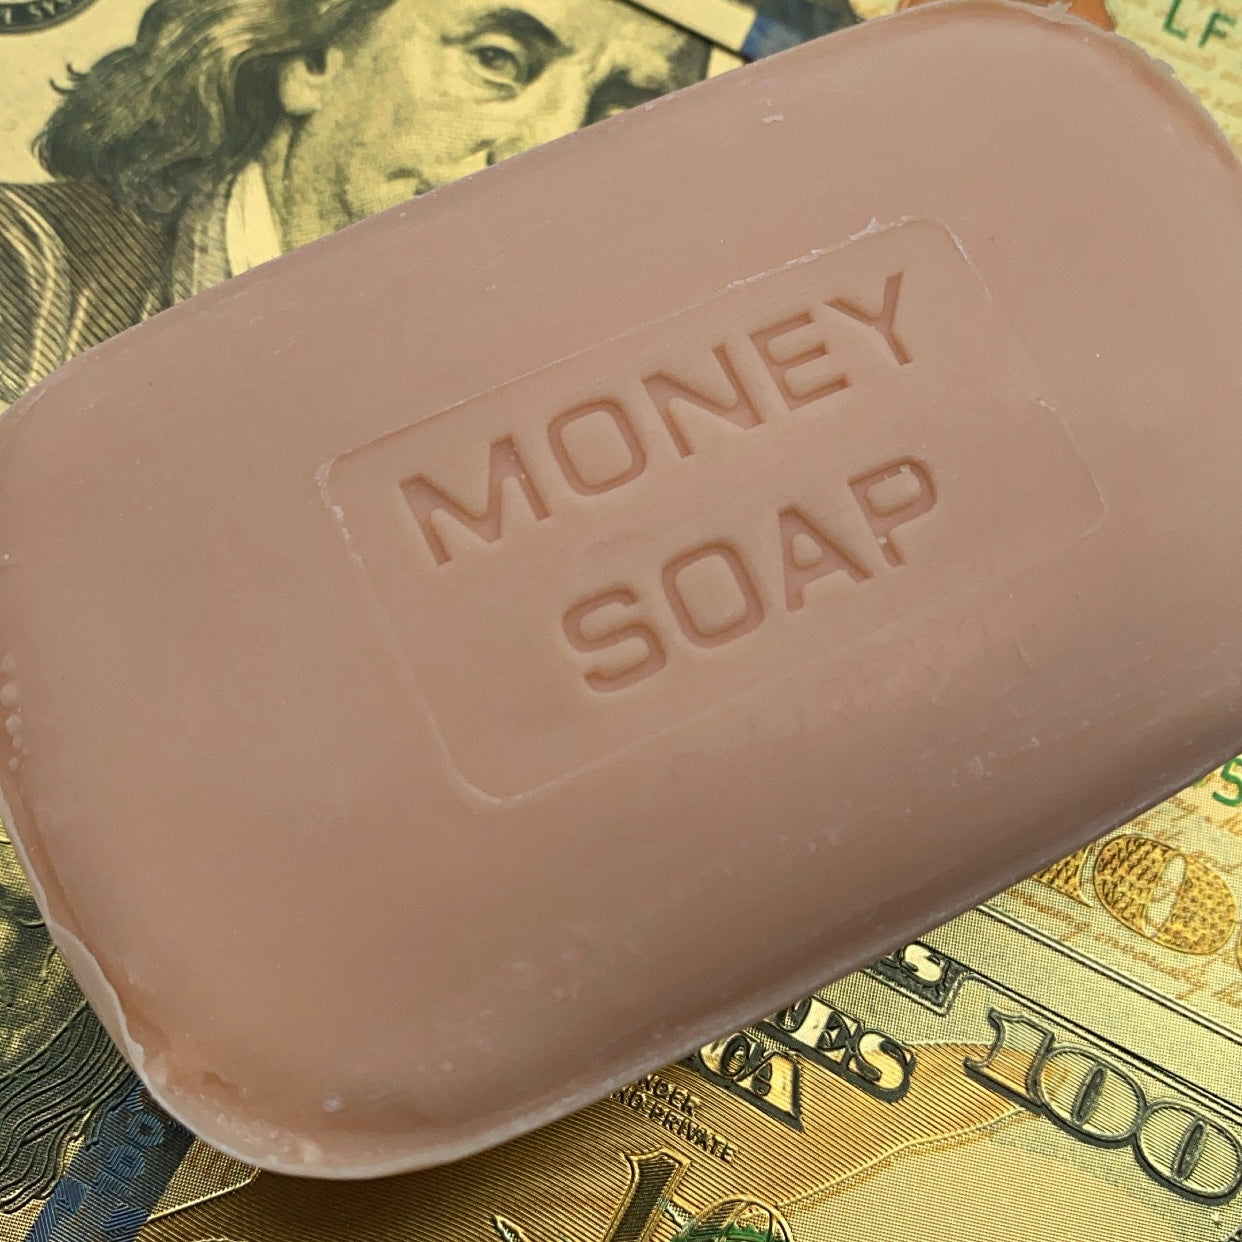 What's inside Money Soap? 